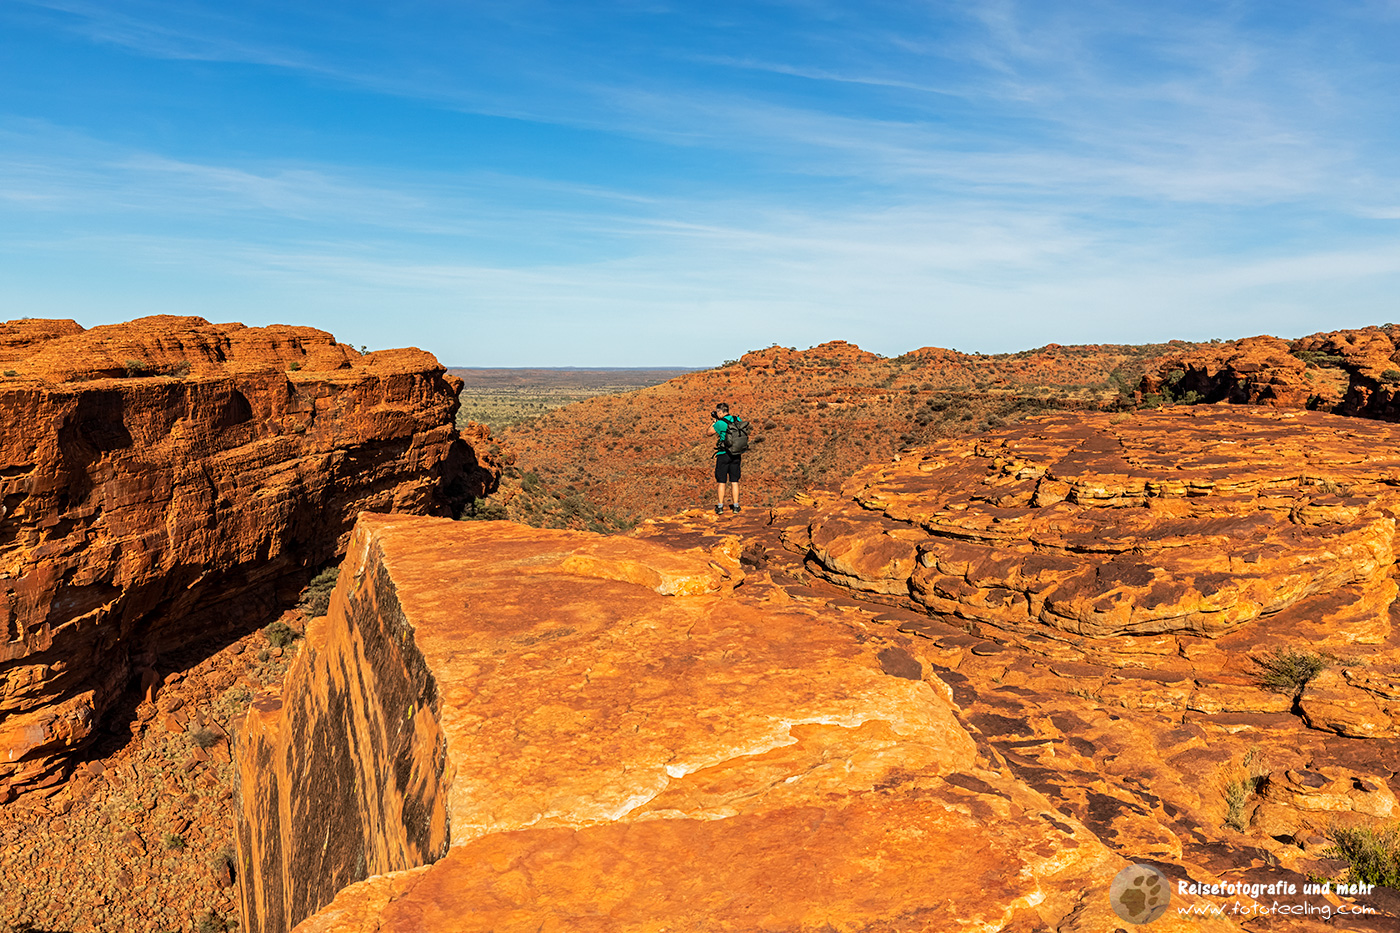 Chris am Abgrund des Kings Canyon, Watarrka-Nationalpark, Northern Territory, Australien